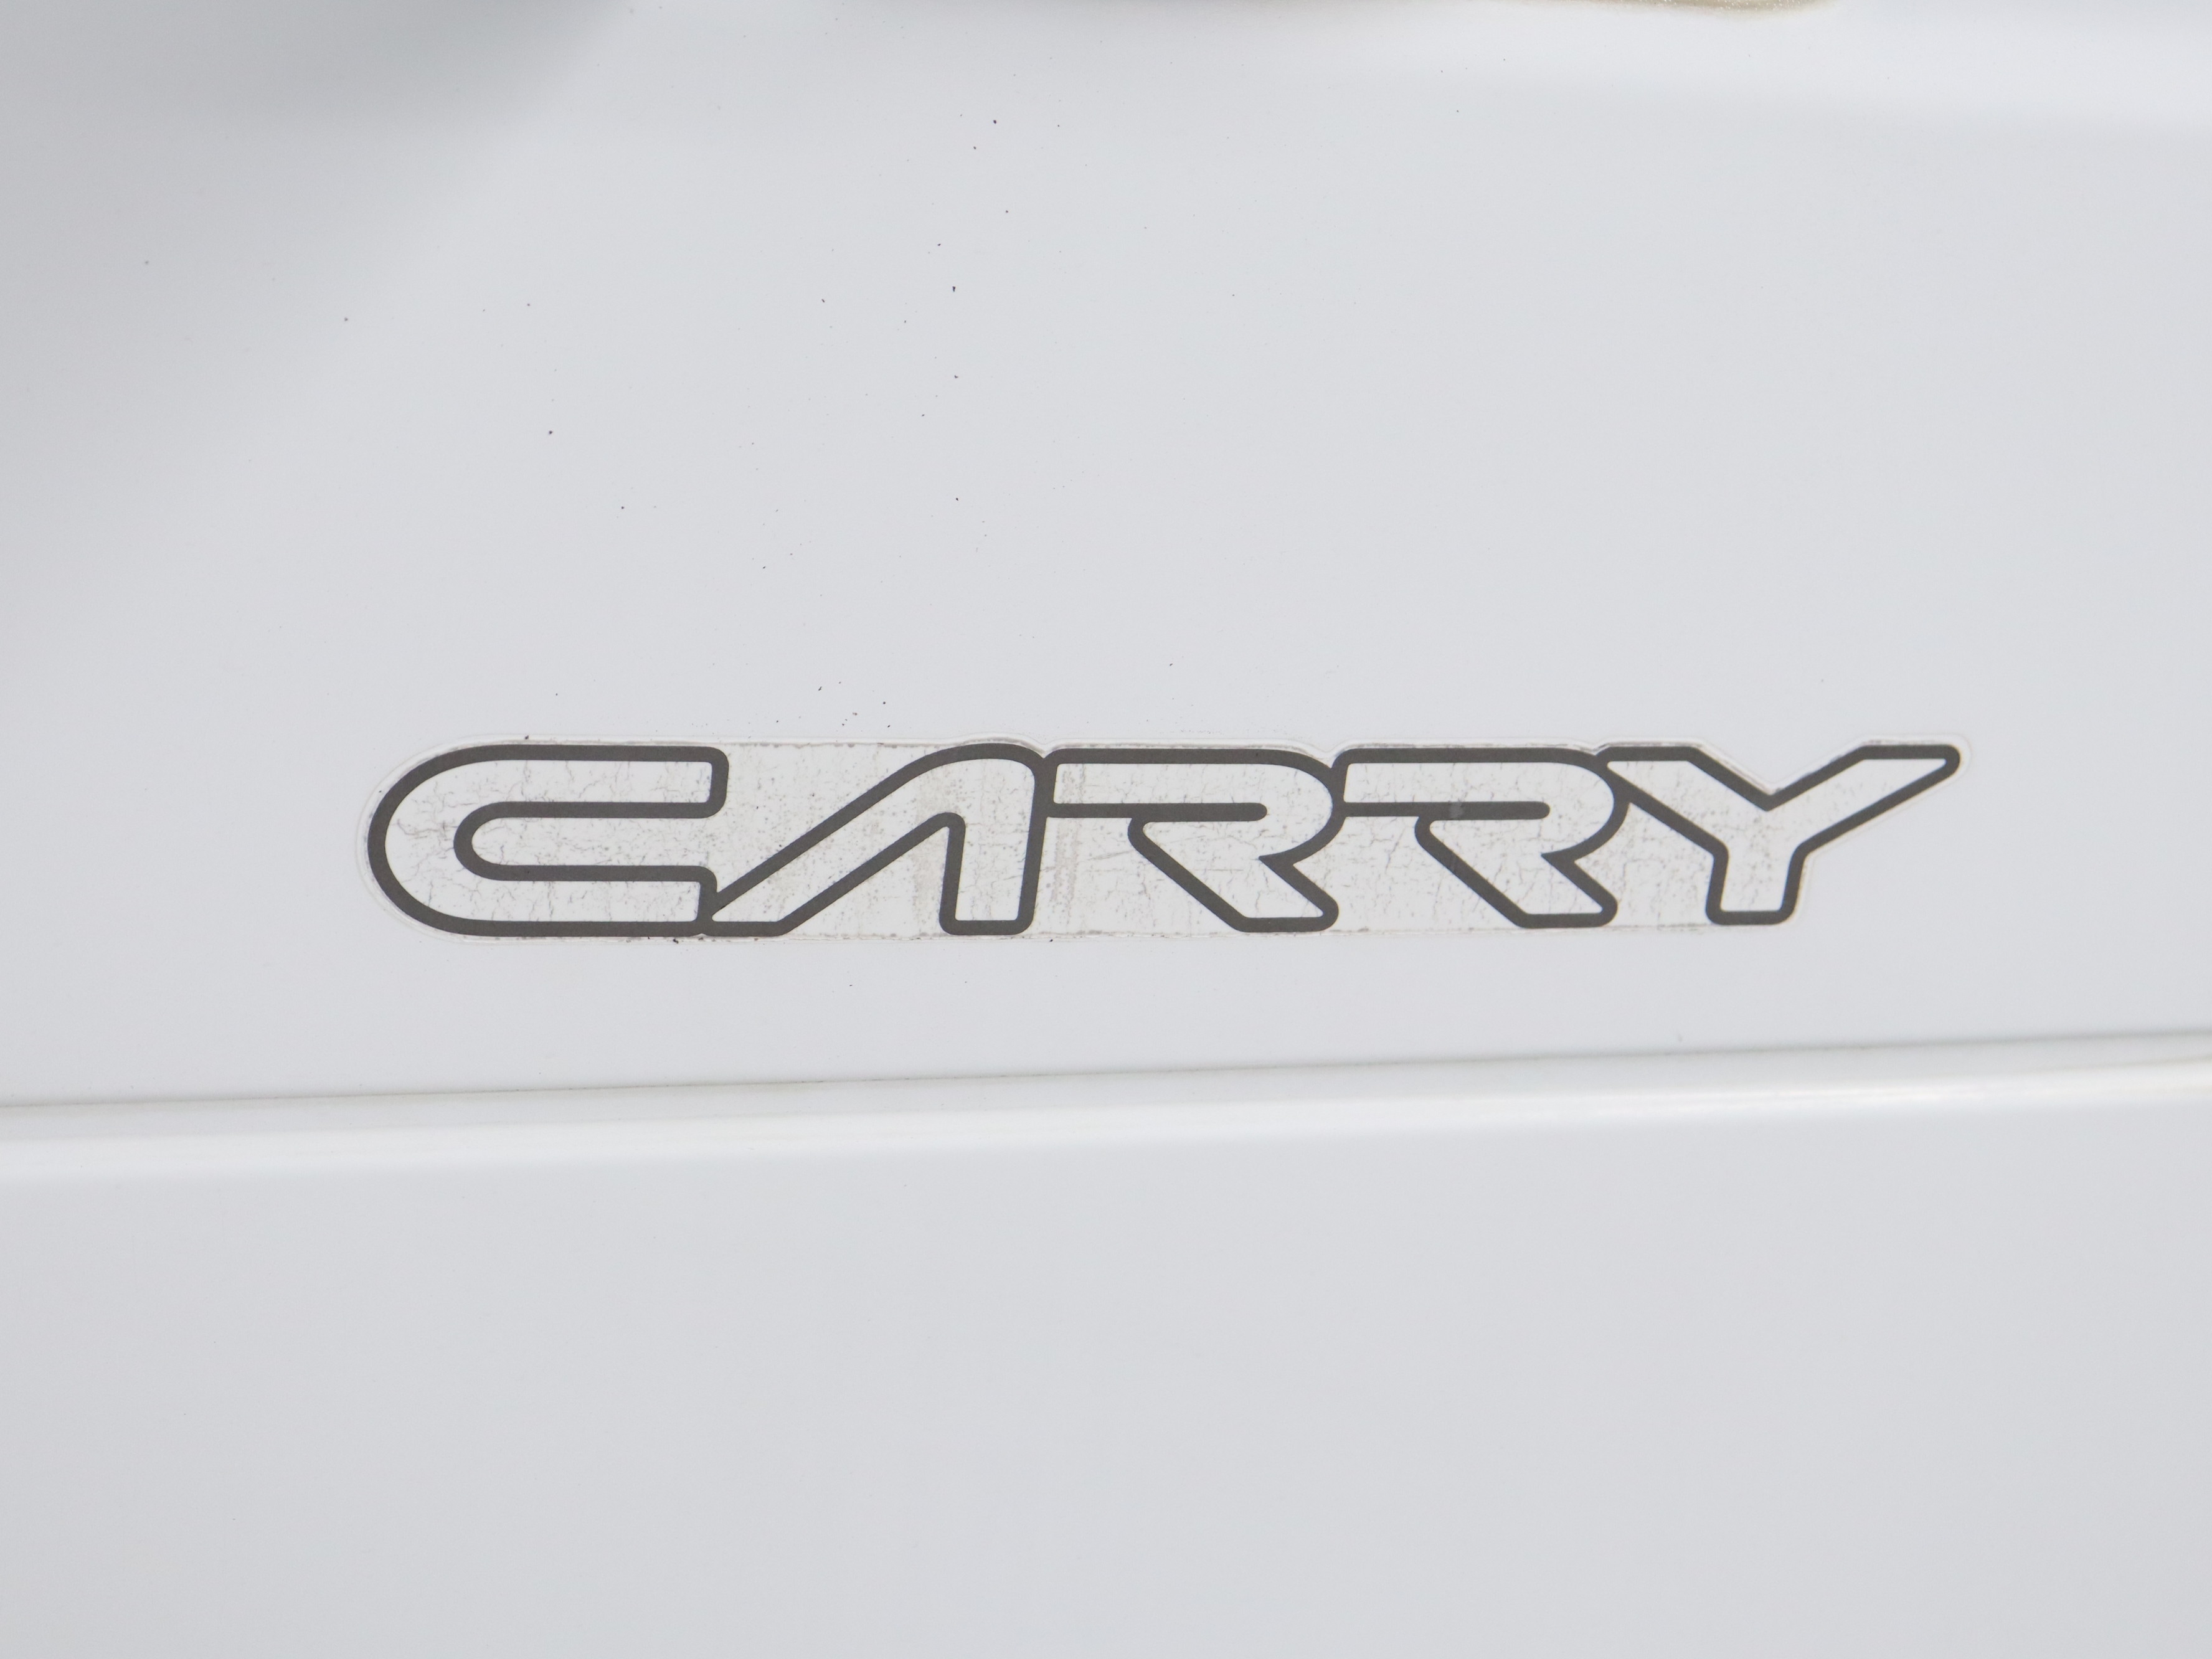 1991 Suzuki Carry 47